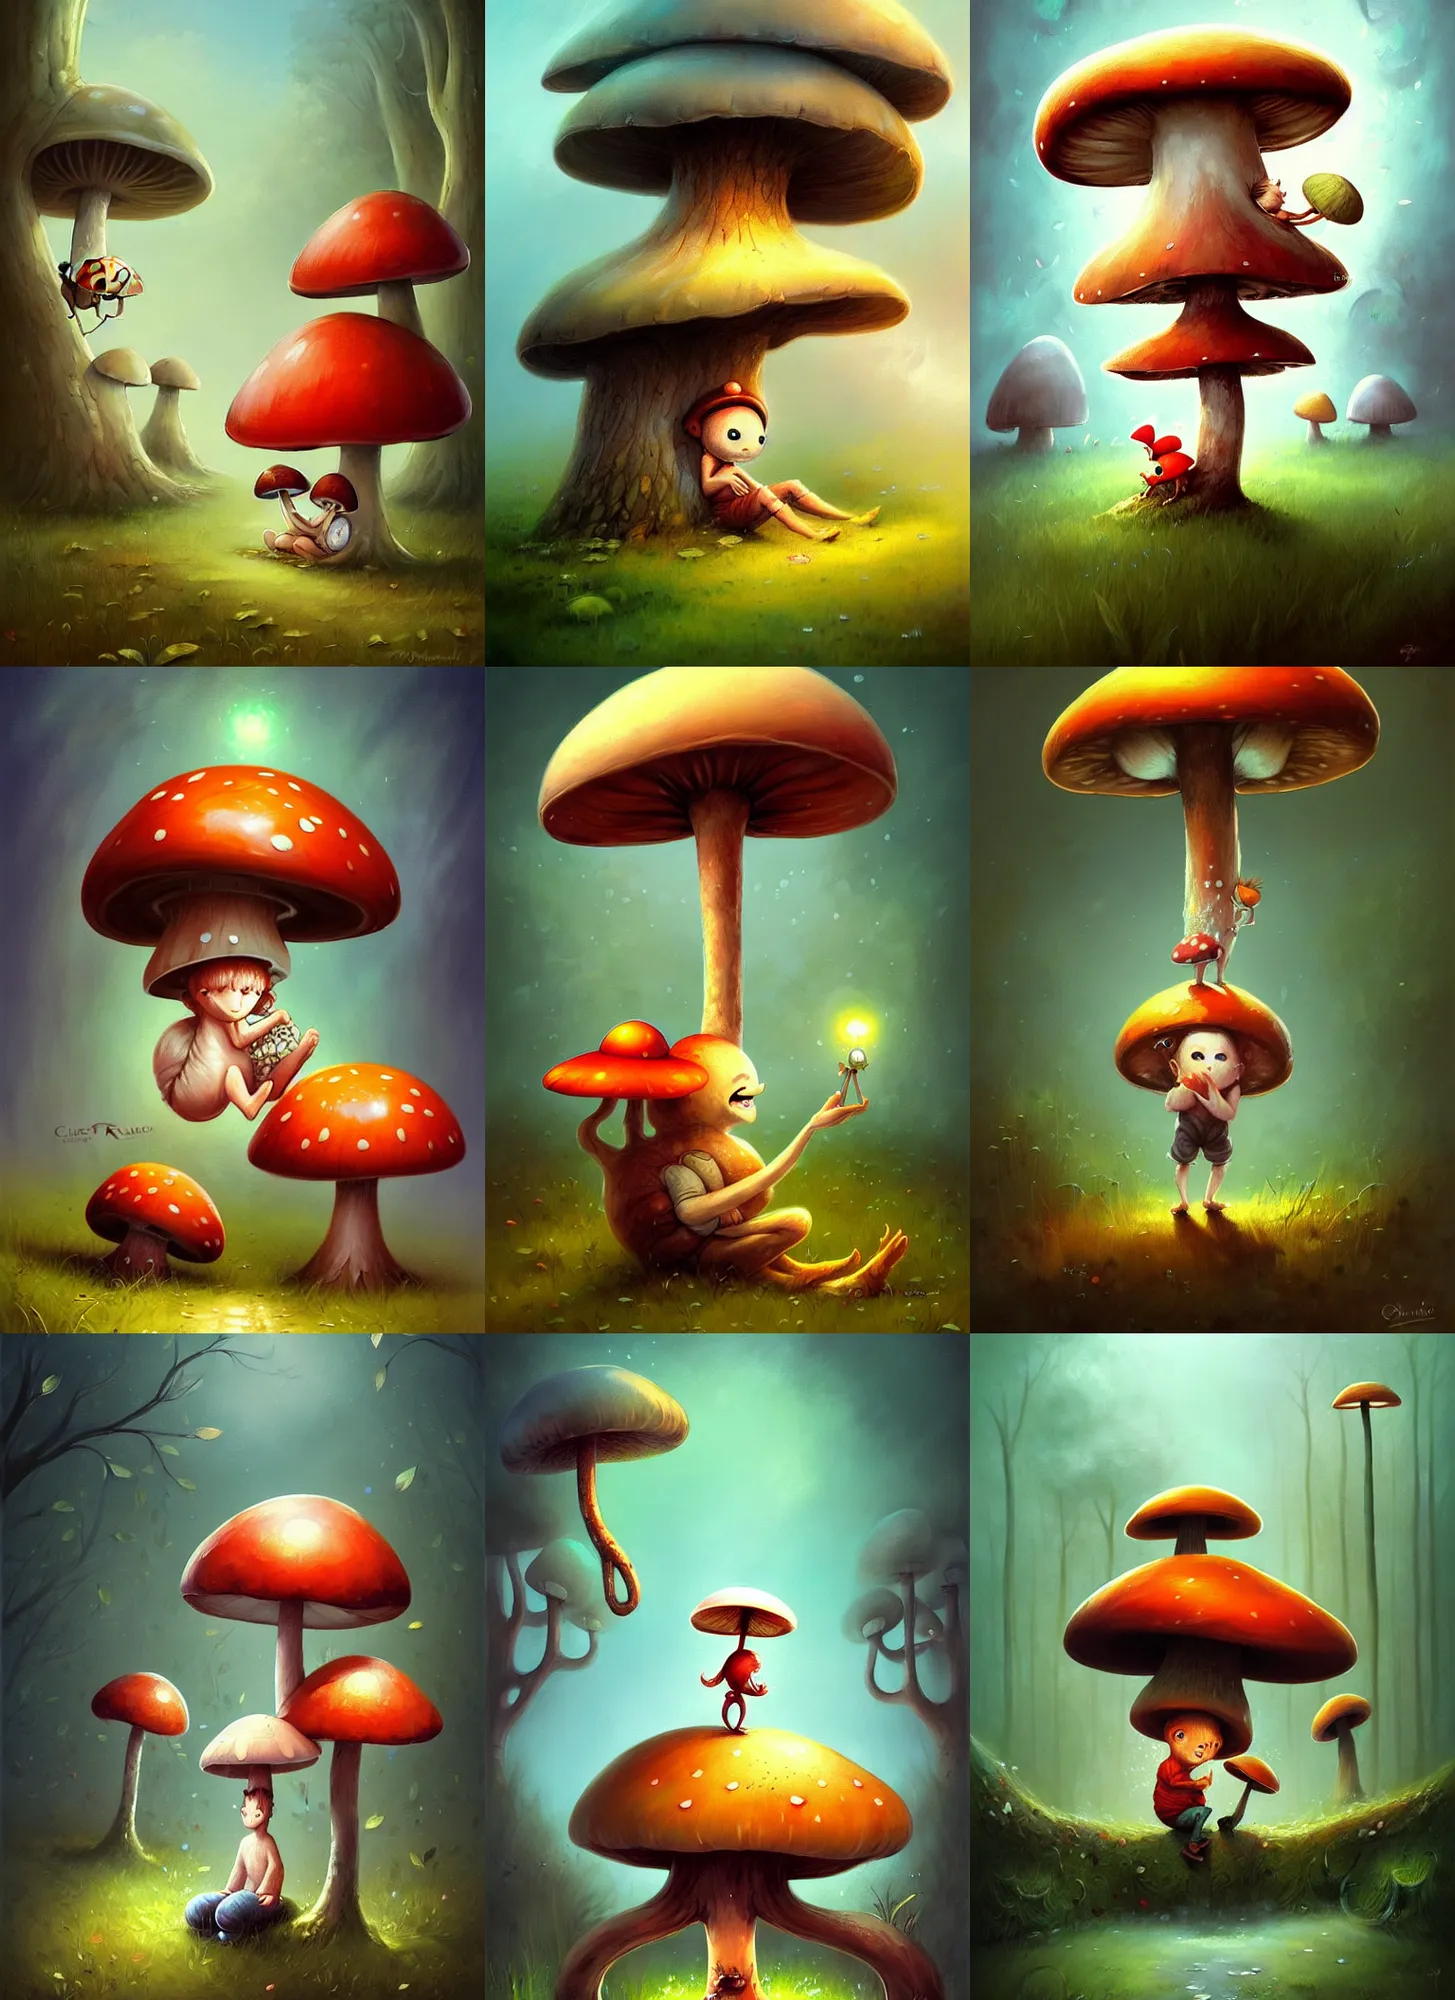 Prompt: a cute cute cute mushroom male, an illustration by esao andrews, cyril rolando and goro fujita, deviantart, fantasy art, storybook illustration, oil on canvas